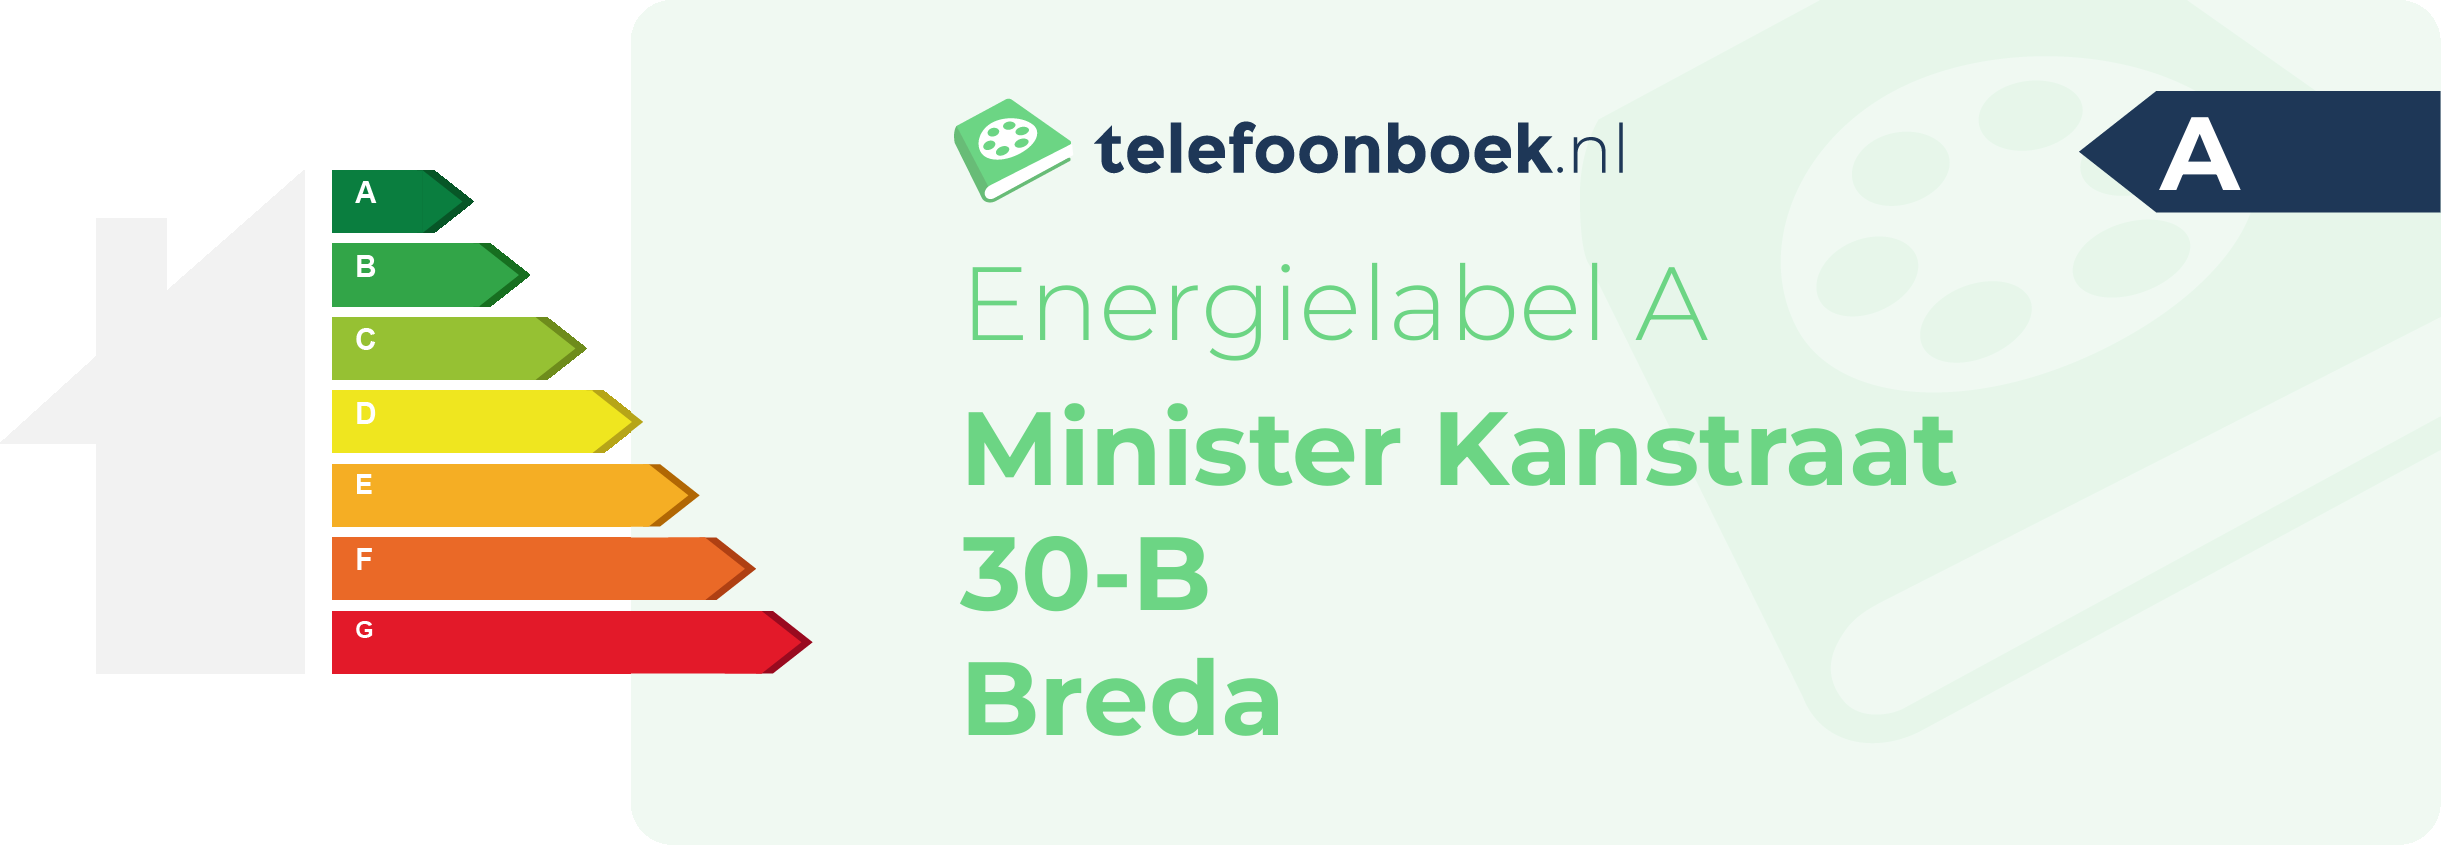 Energielabel Minister Kanstraat 30-B Breda